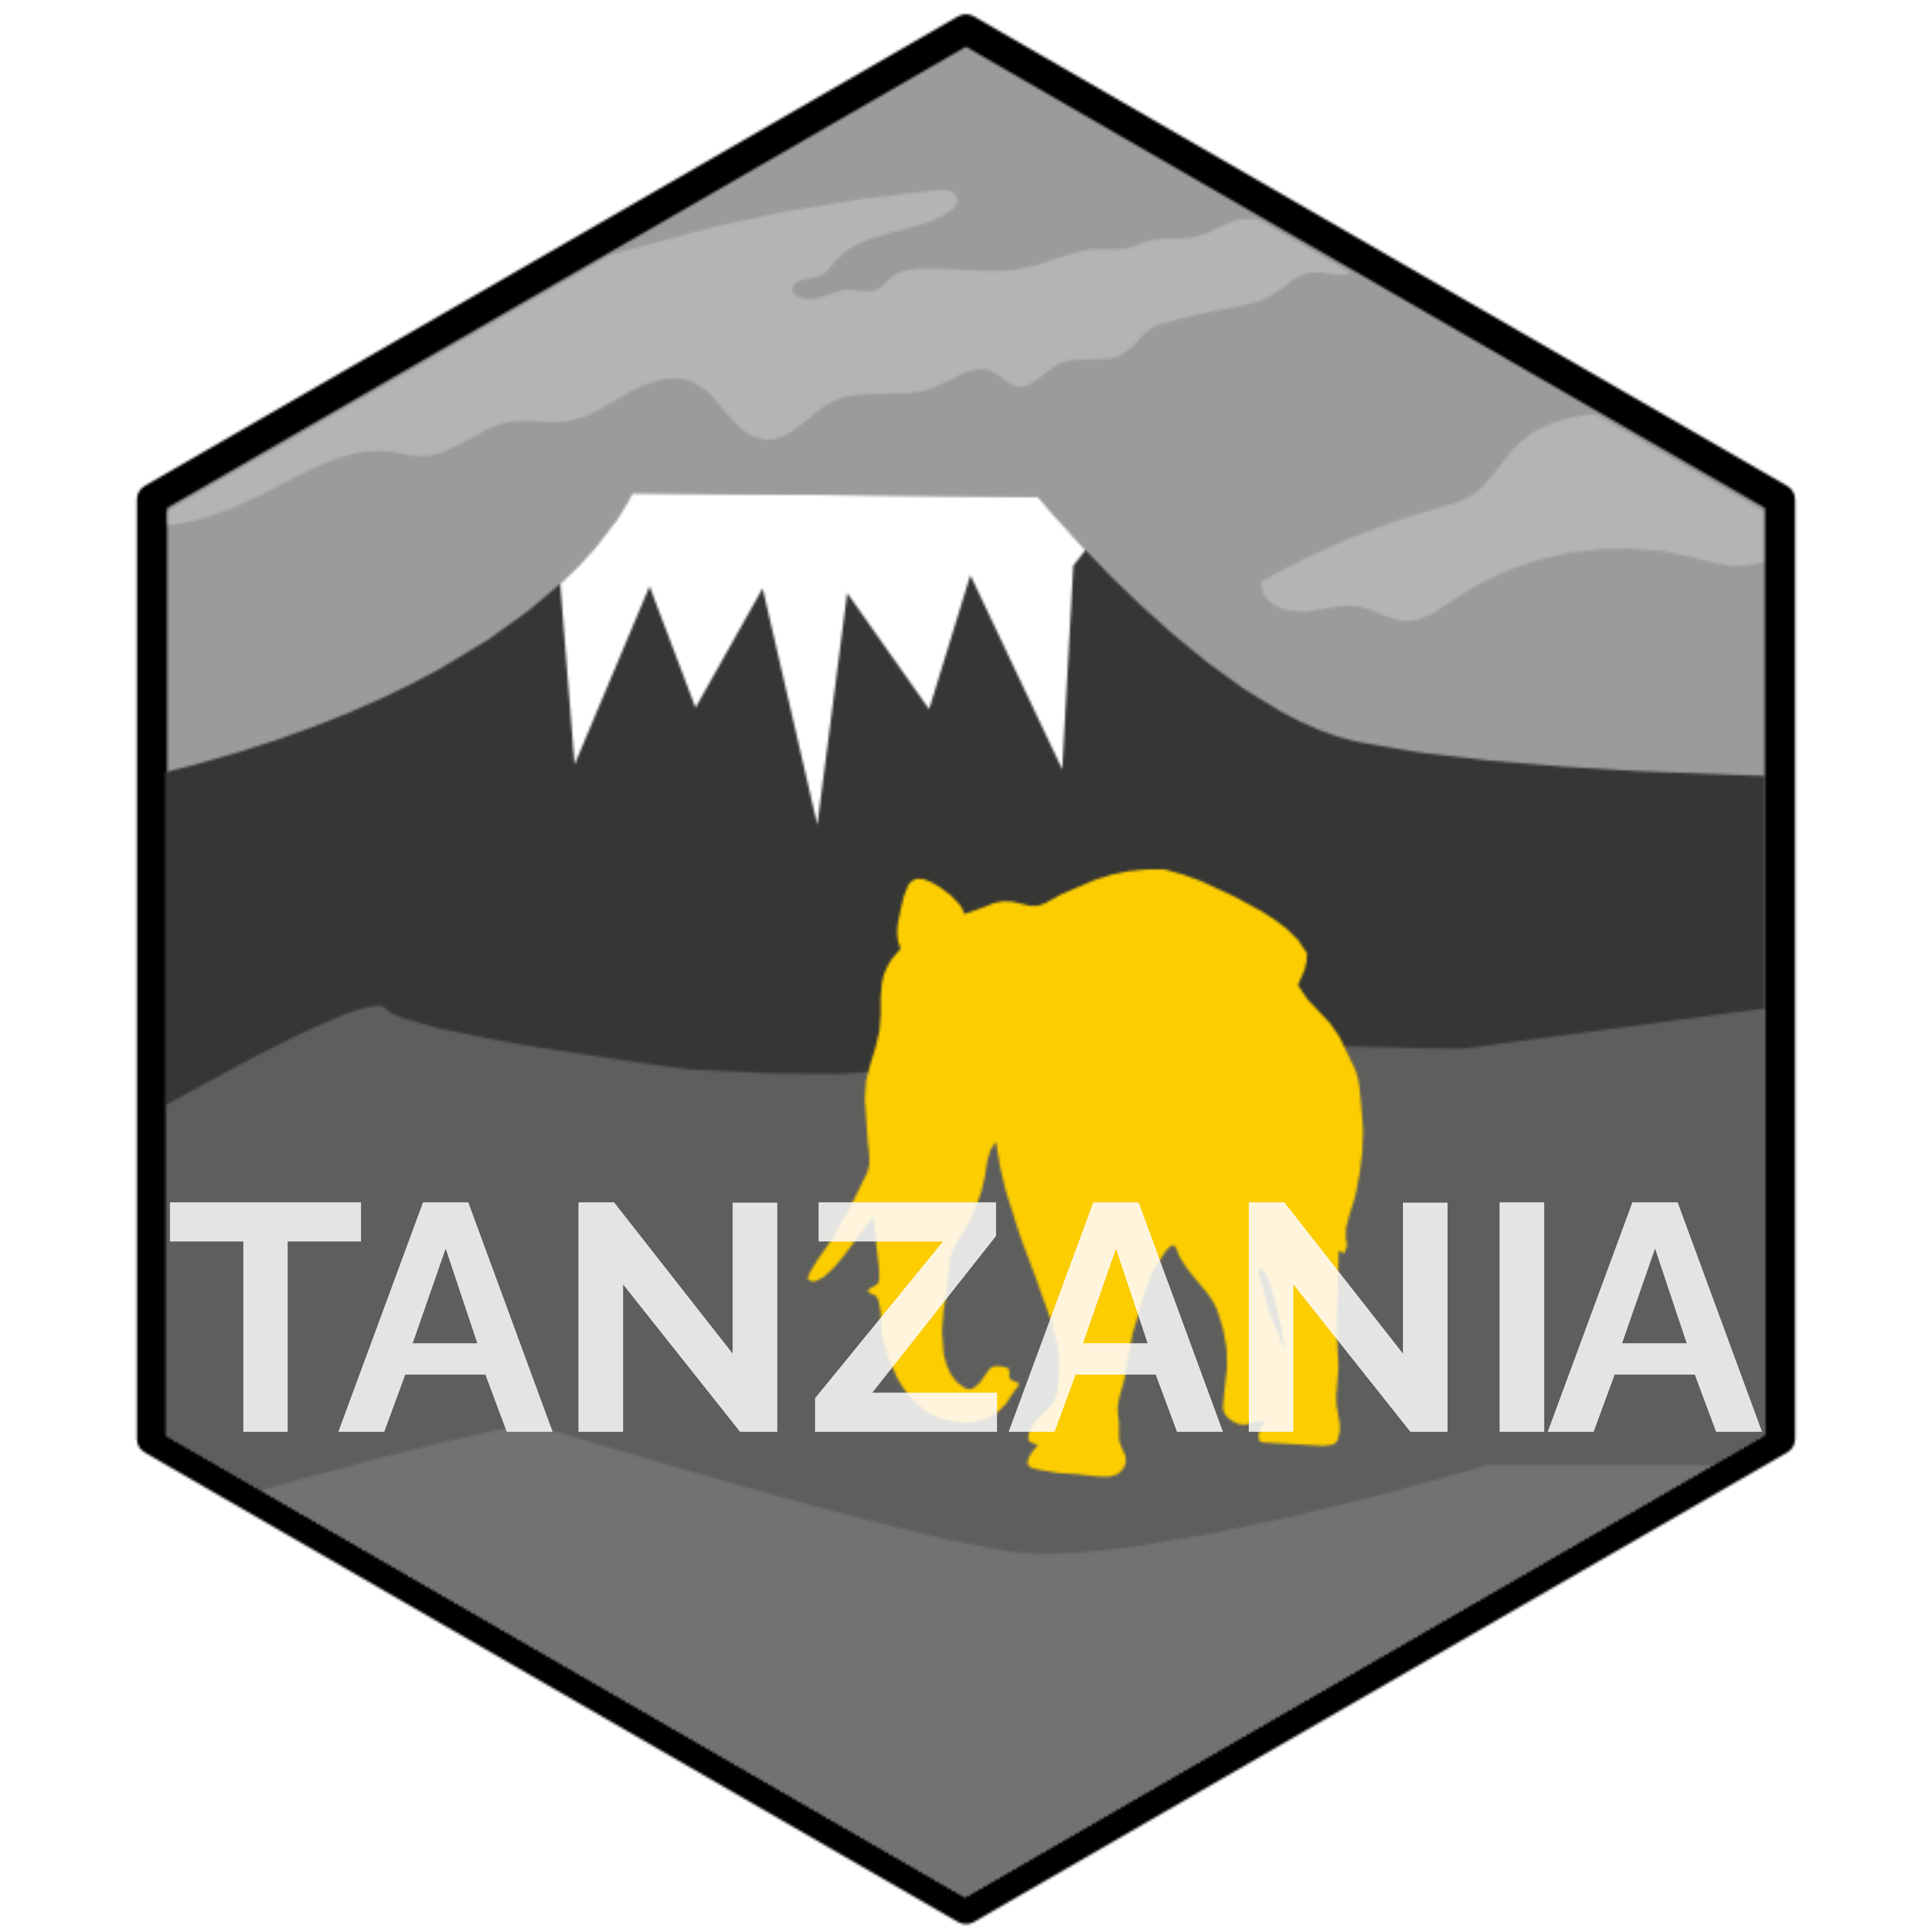 FEEL THE TANZANIAN ATMOSPHERE